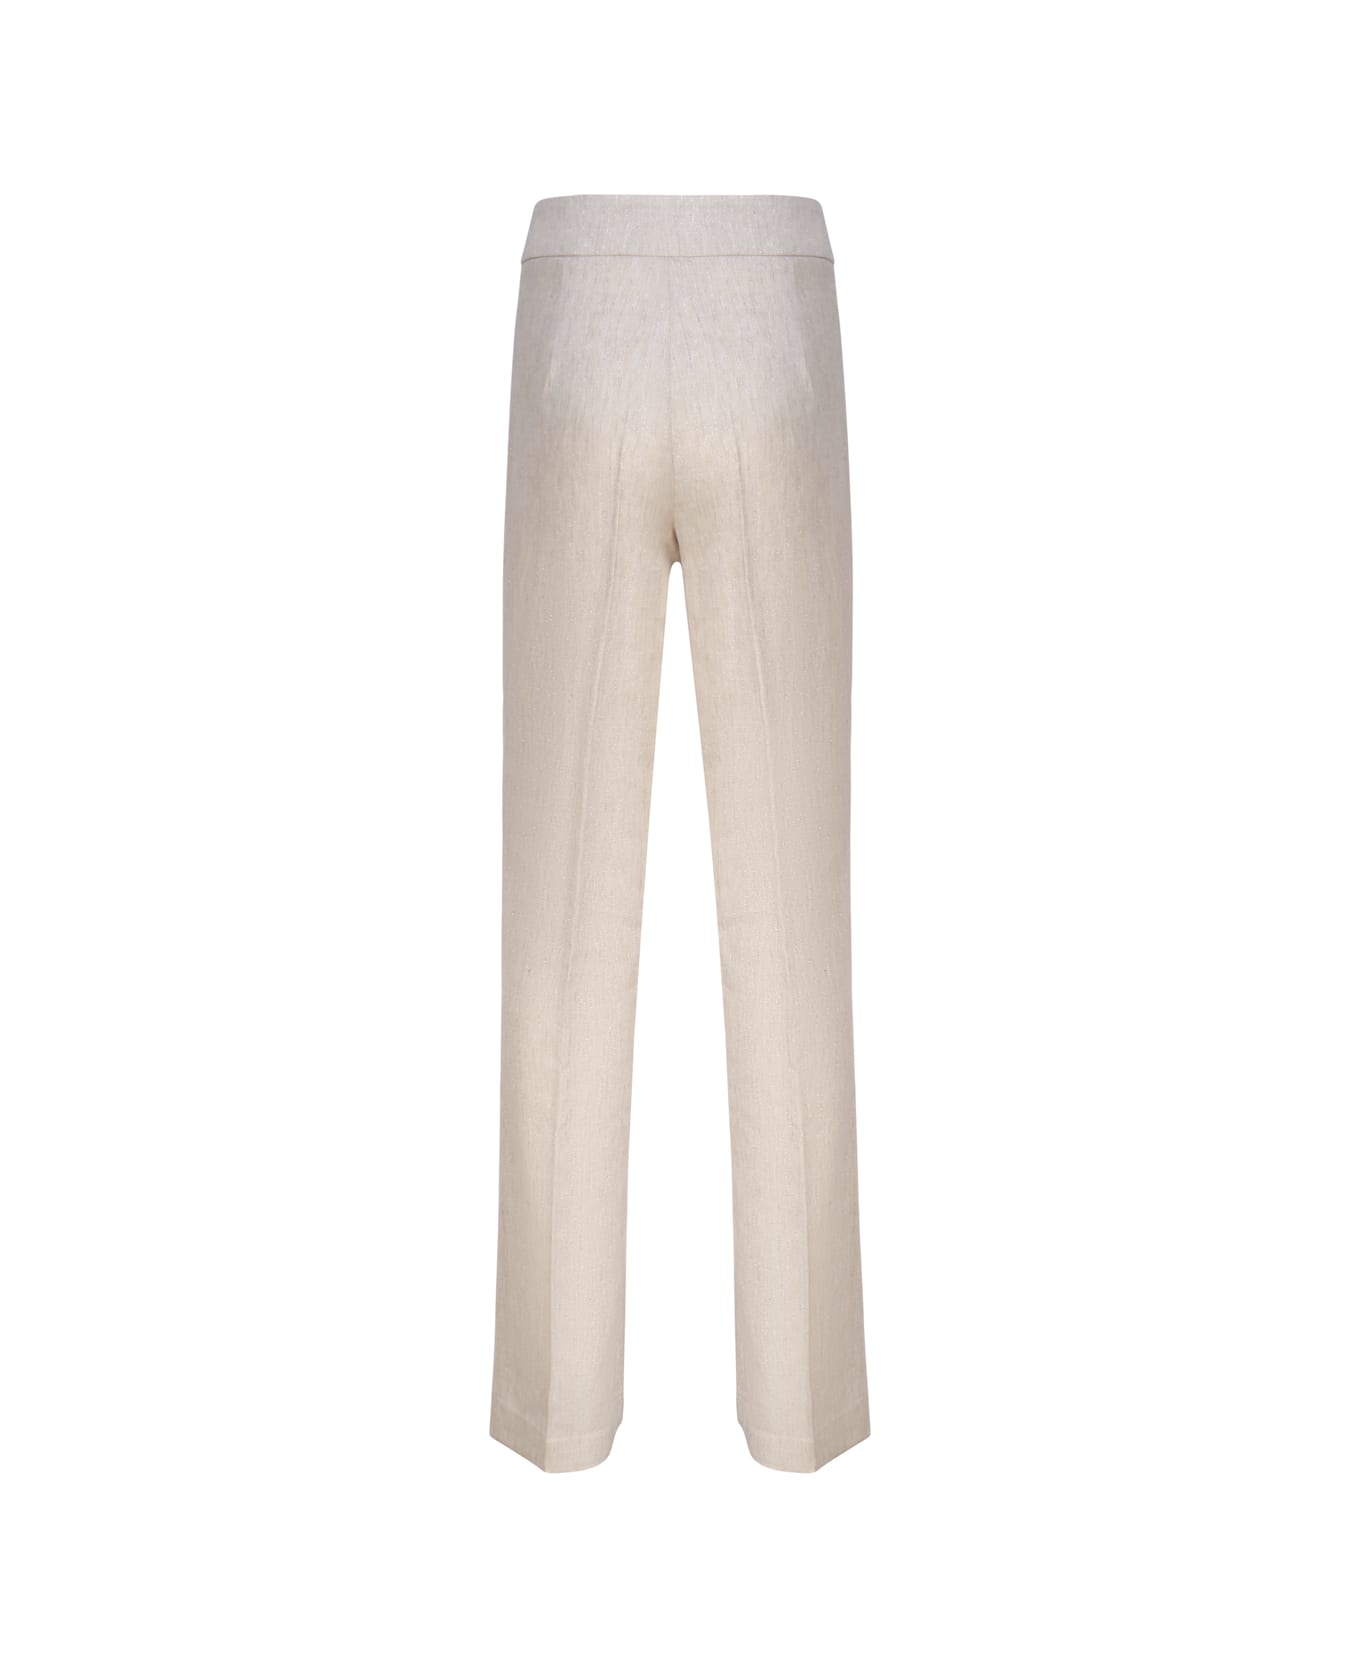 Genny Linen Blend Tailored Pants - Beige